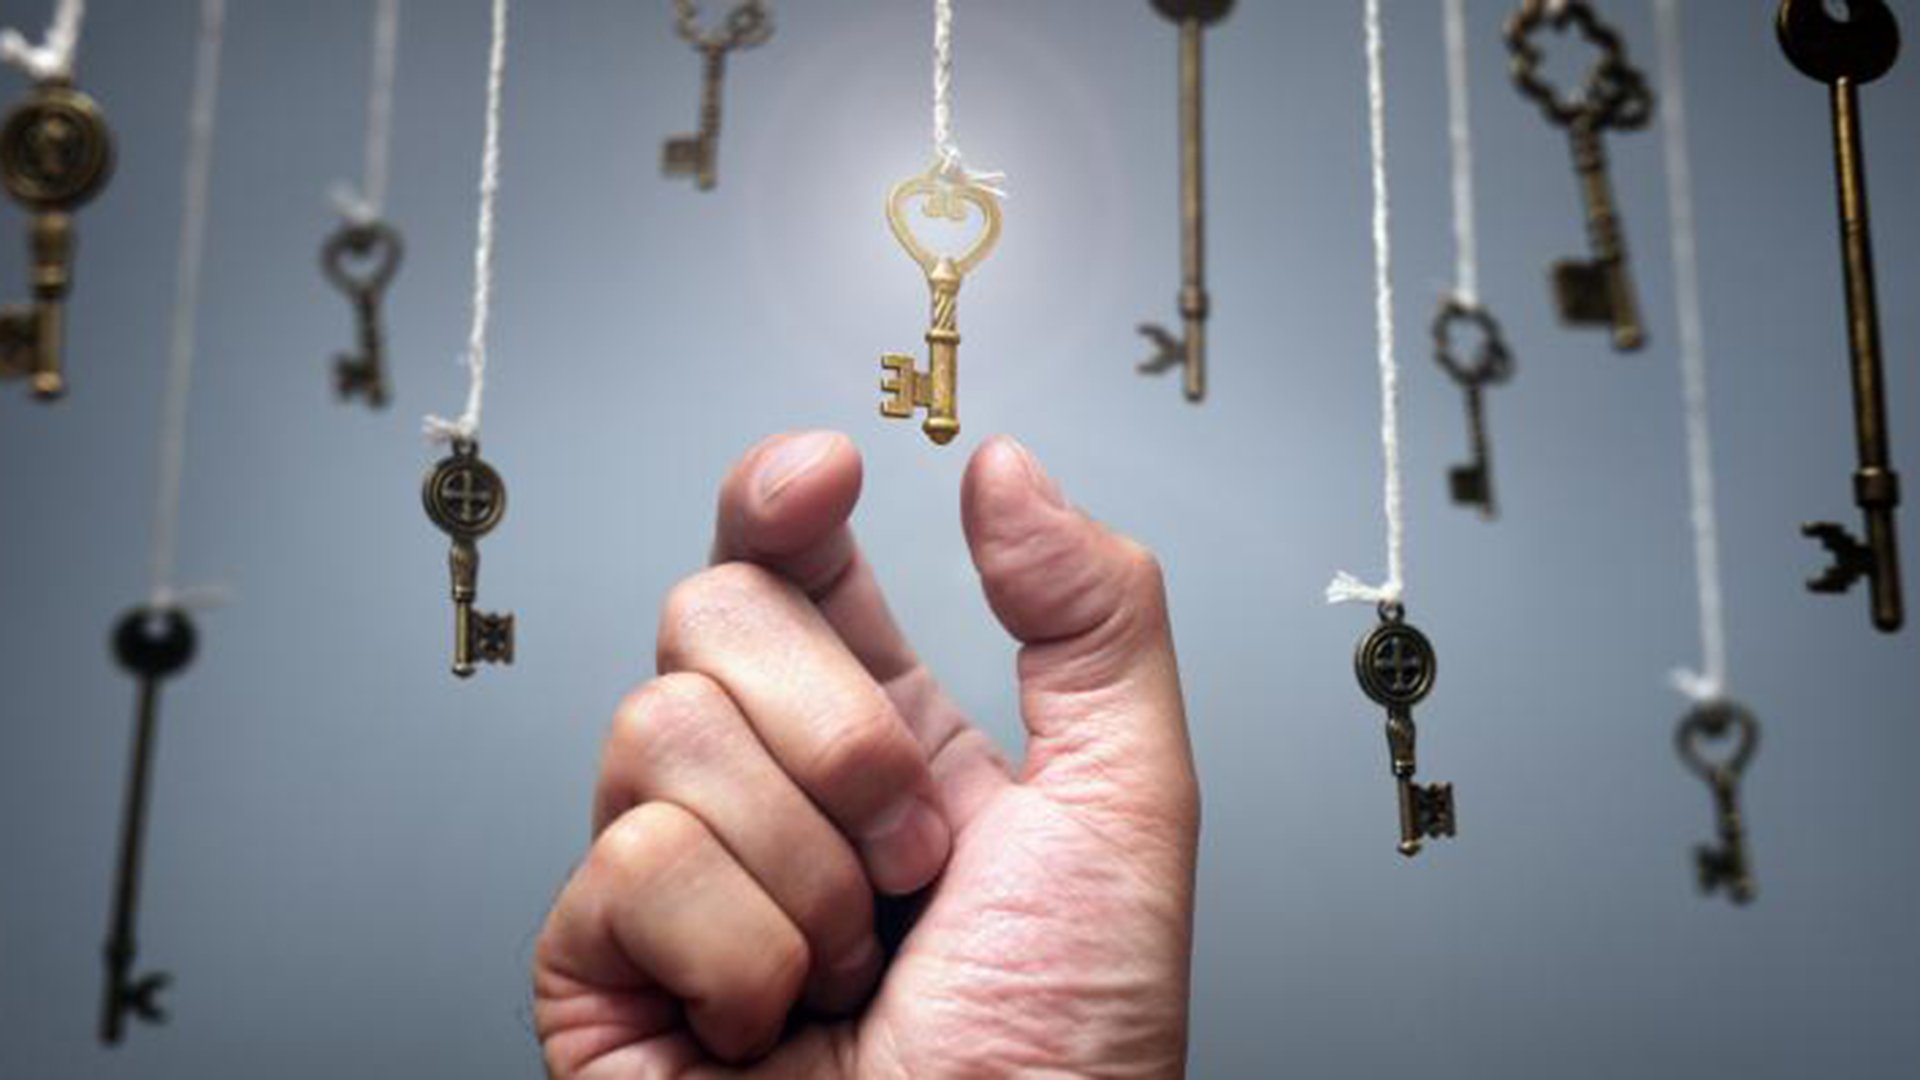 Choosing the key to success from hanging keys The Art of Desicion Making program